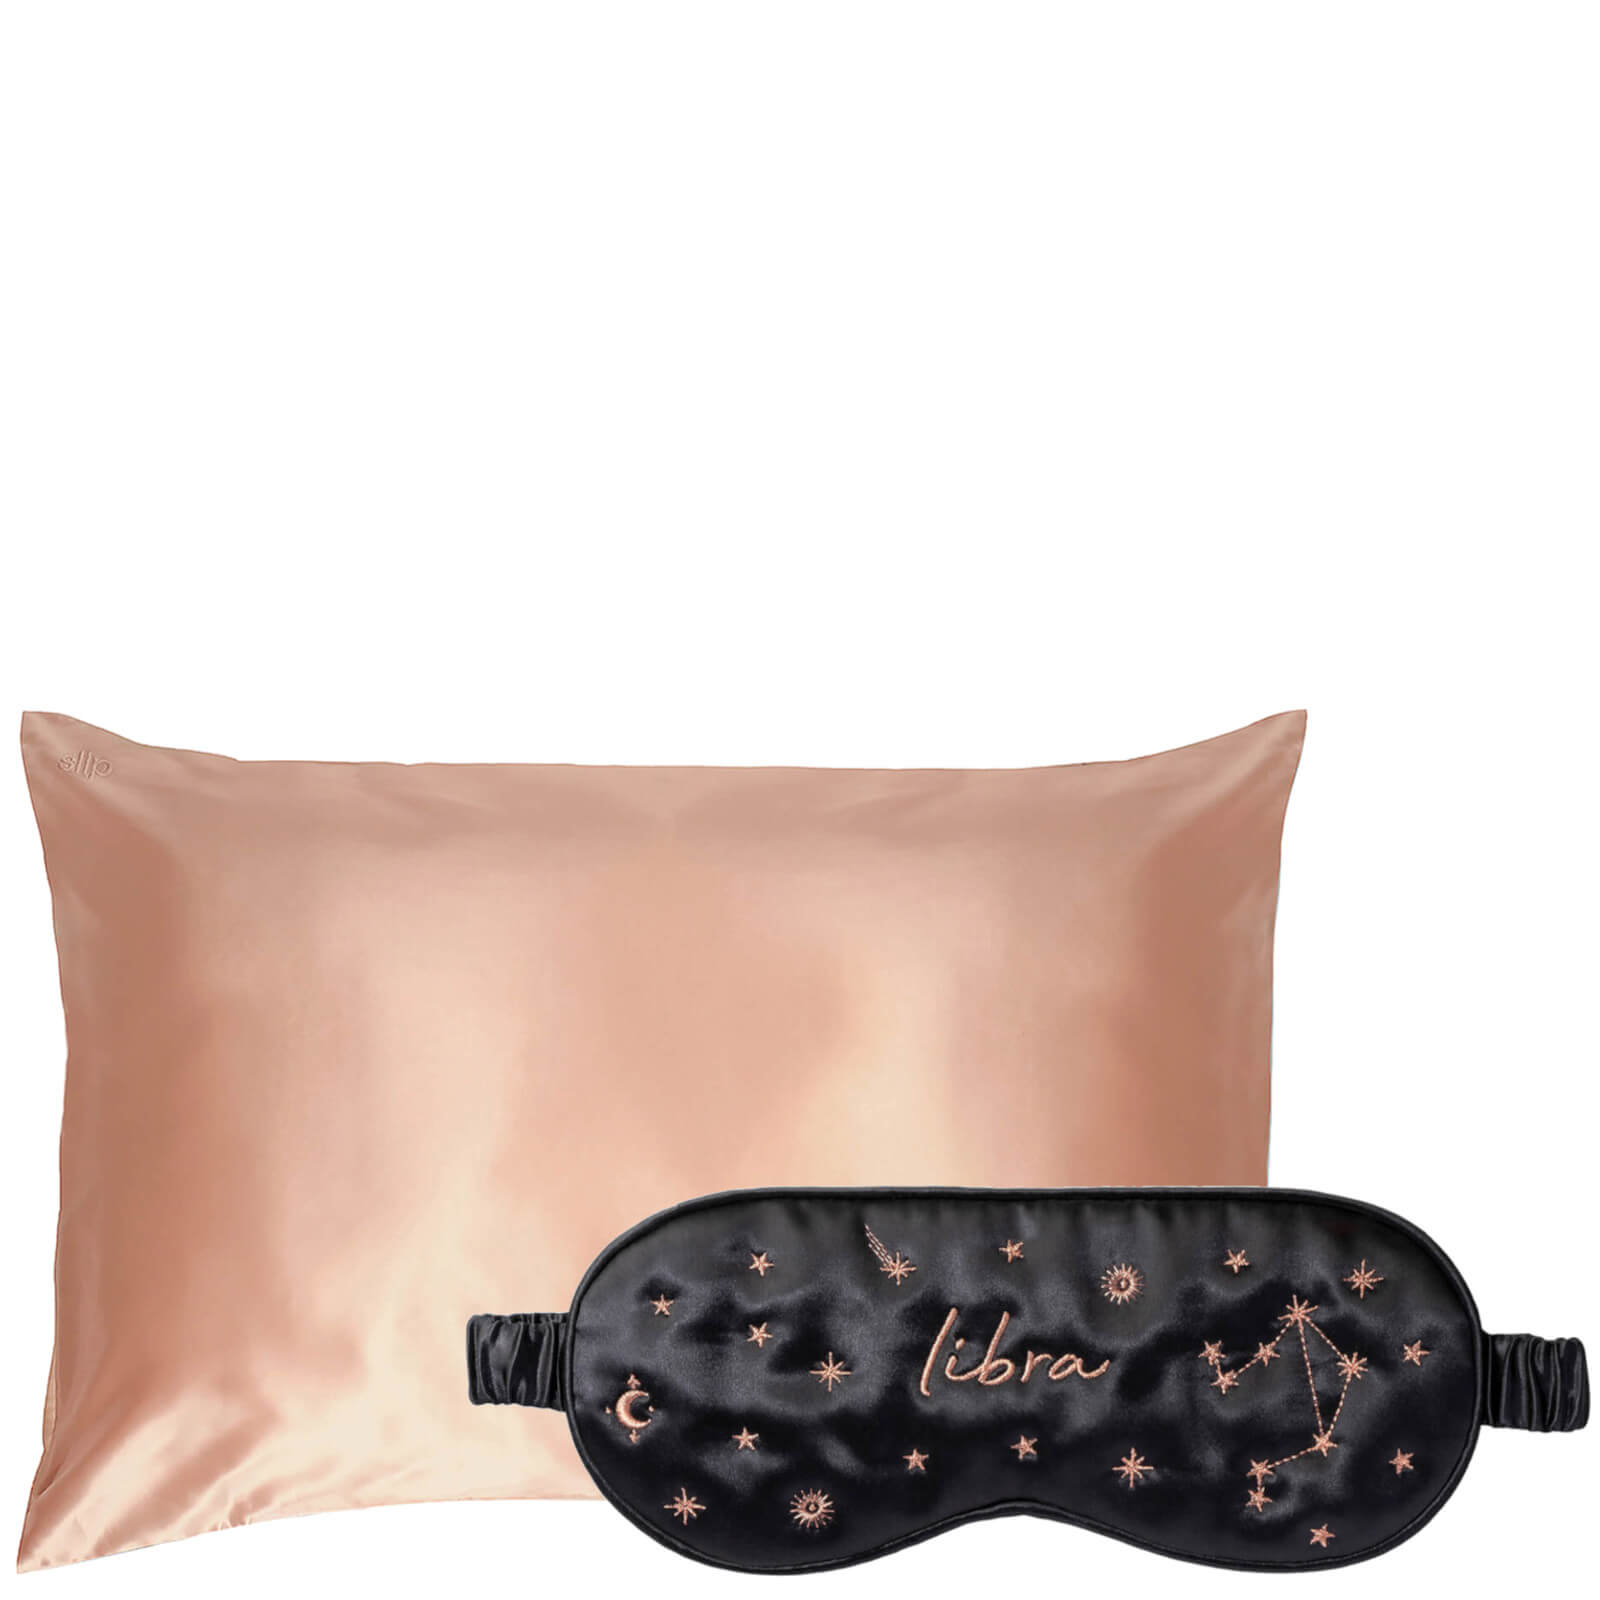 Slip Exclusive Zodiac Sleep Mask and Rose Gold Pillowcase (Various Options) - Libra